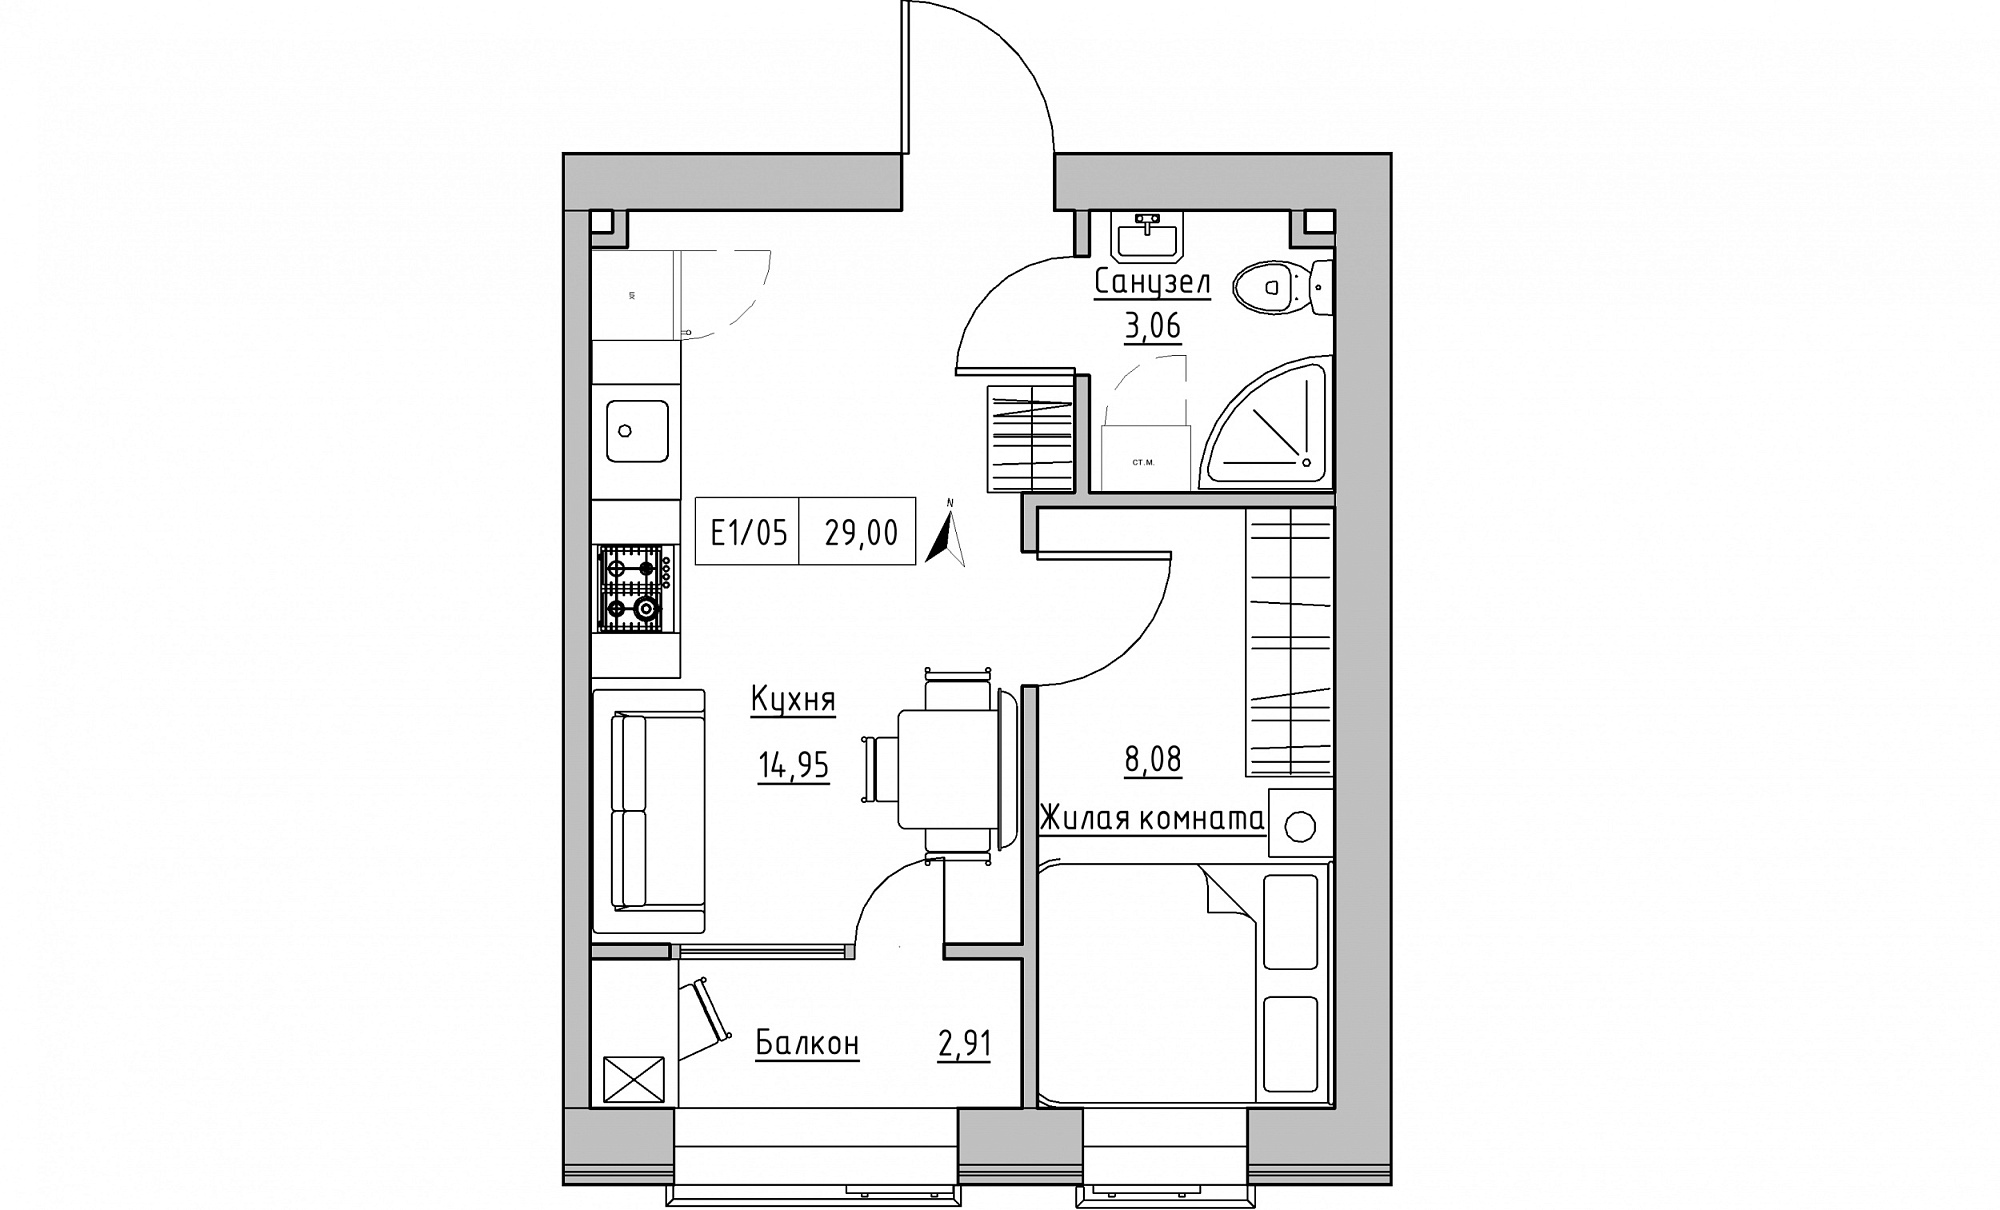 Planning 1-rm flats area 29m2, KS-015-01/0009.